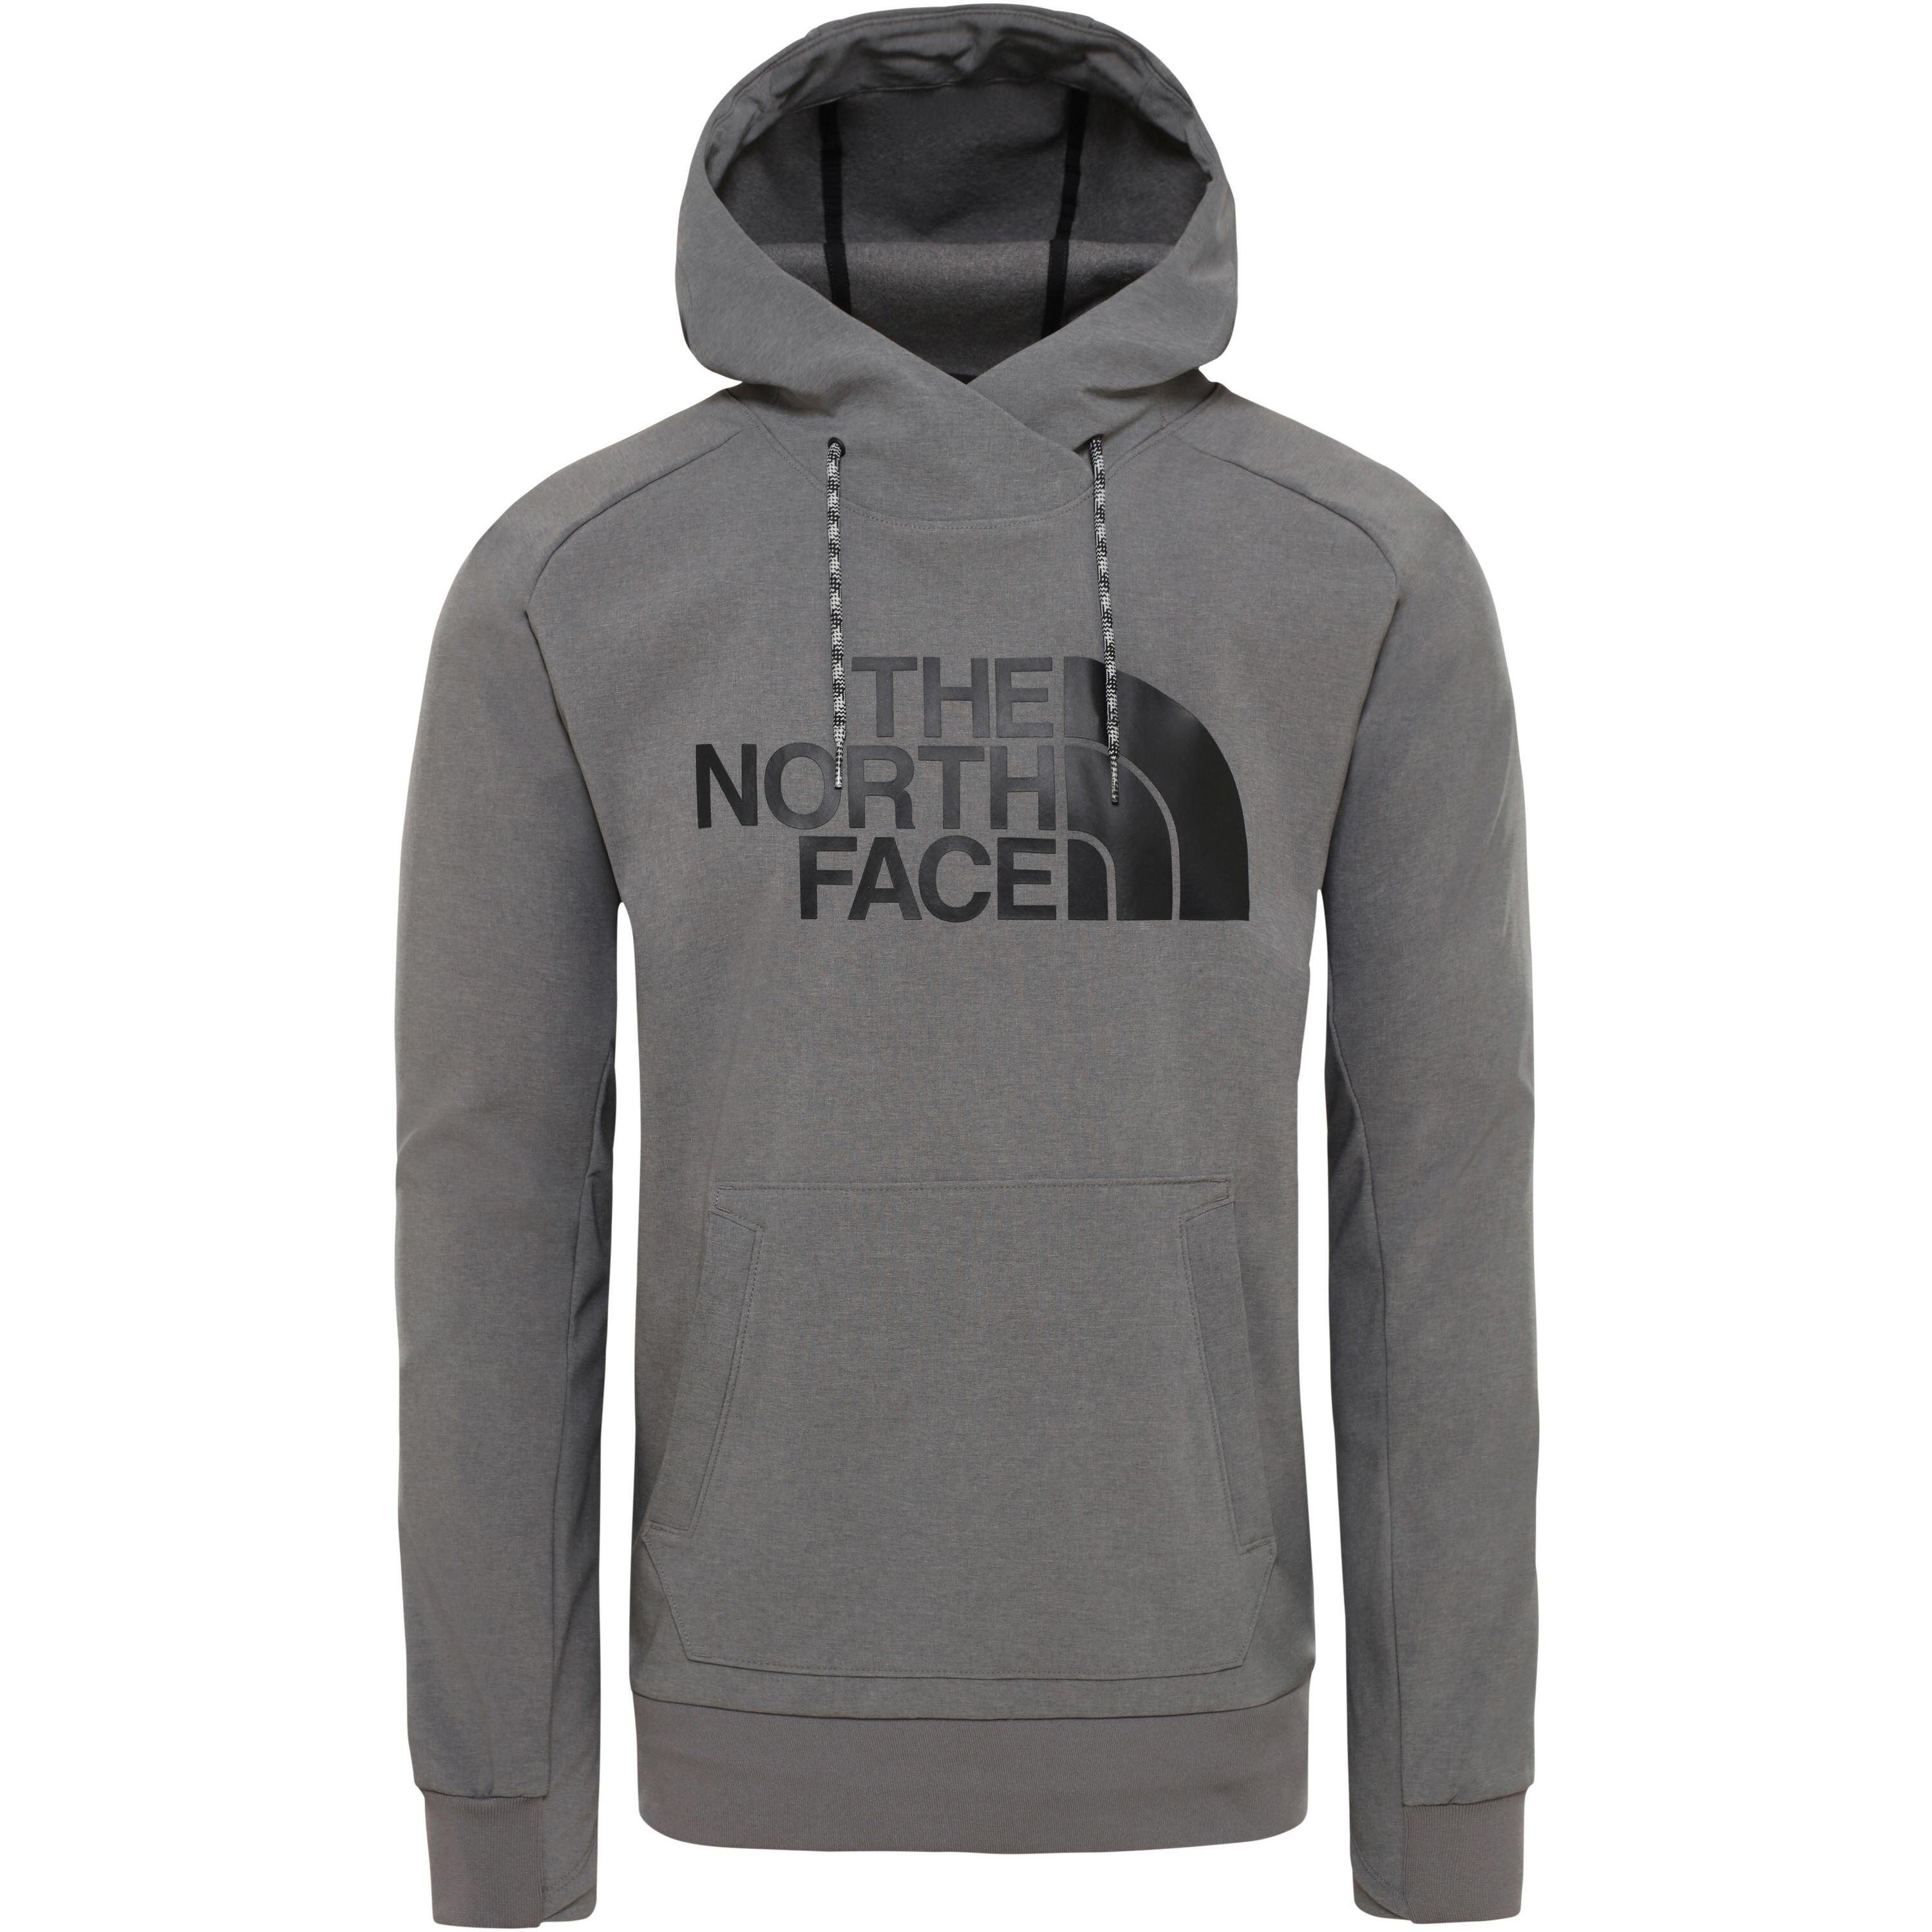 The North Face Kapuzenpullover »TEKNO LOGO«, tnf medium grey heather